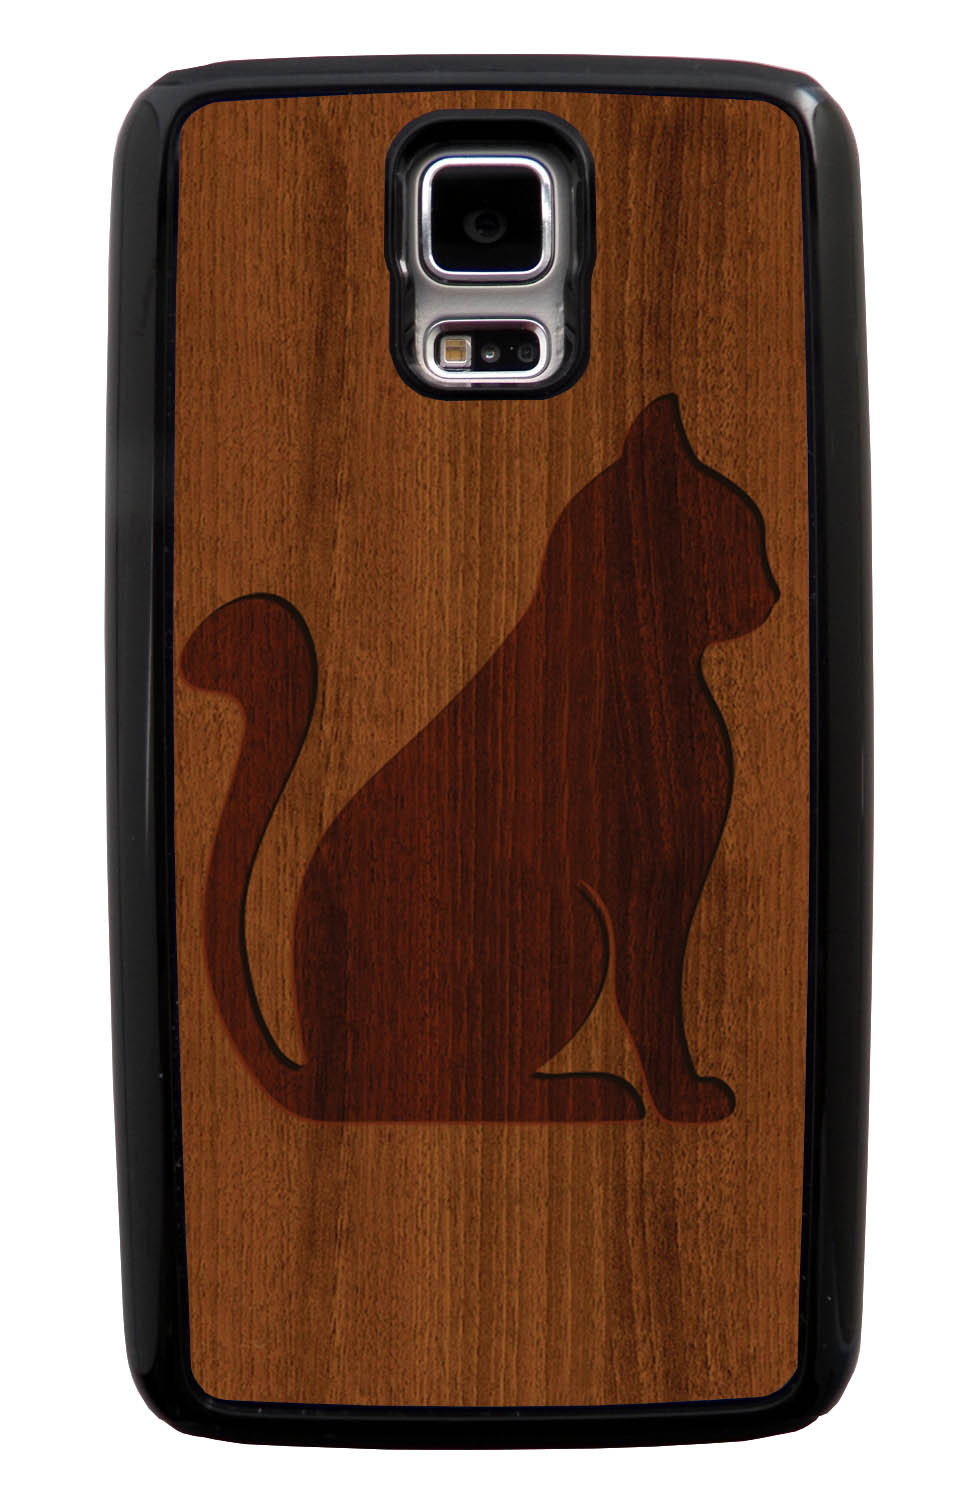 Samsung Galaxy S5 / SV Cat Case - Simulated Cherry Wood Engraving Sitting Cat - Simple Stencils Cutout - Black Tough Hybrid Case